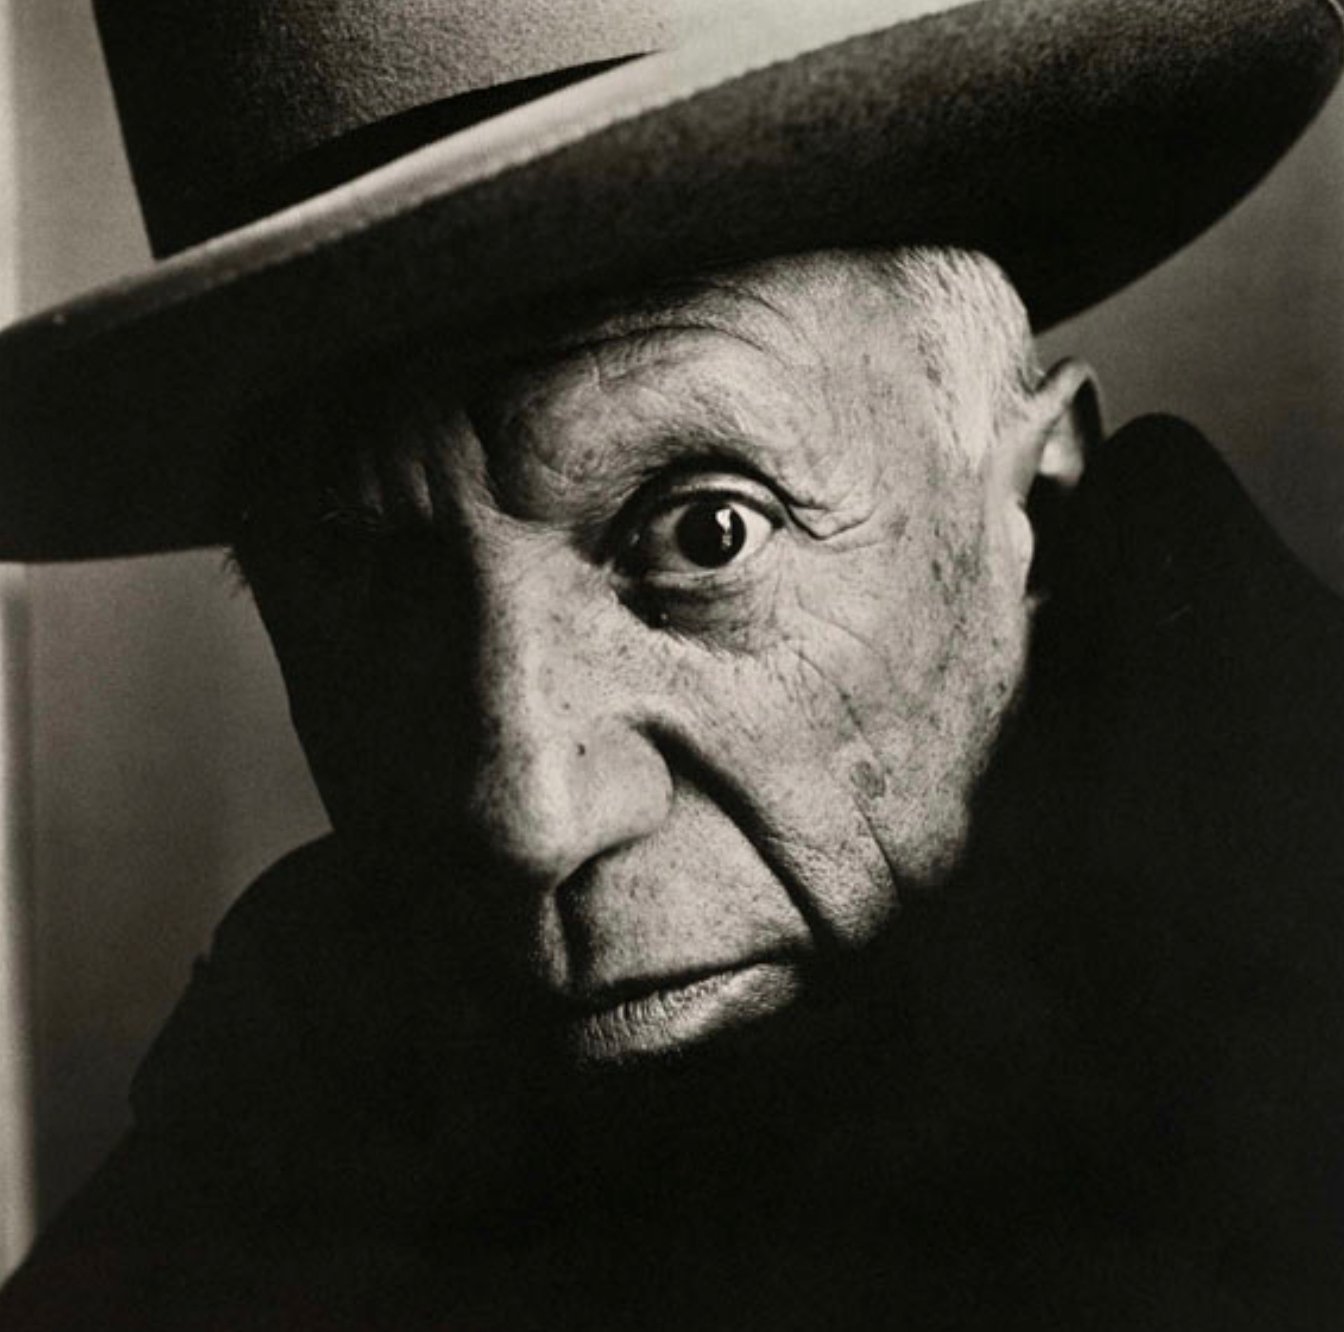 Artnet's Head of Photographs on the Iconic Career of Irving Penn